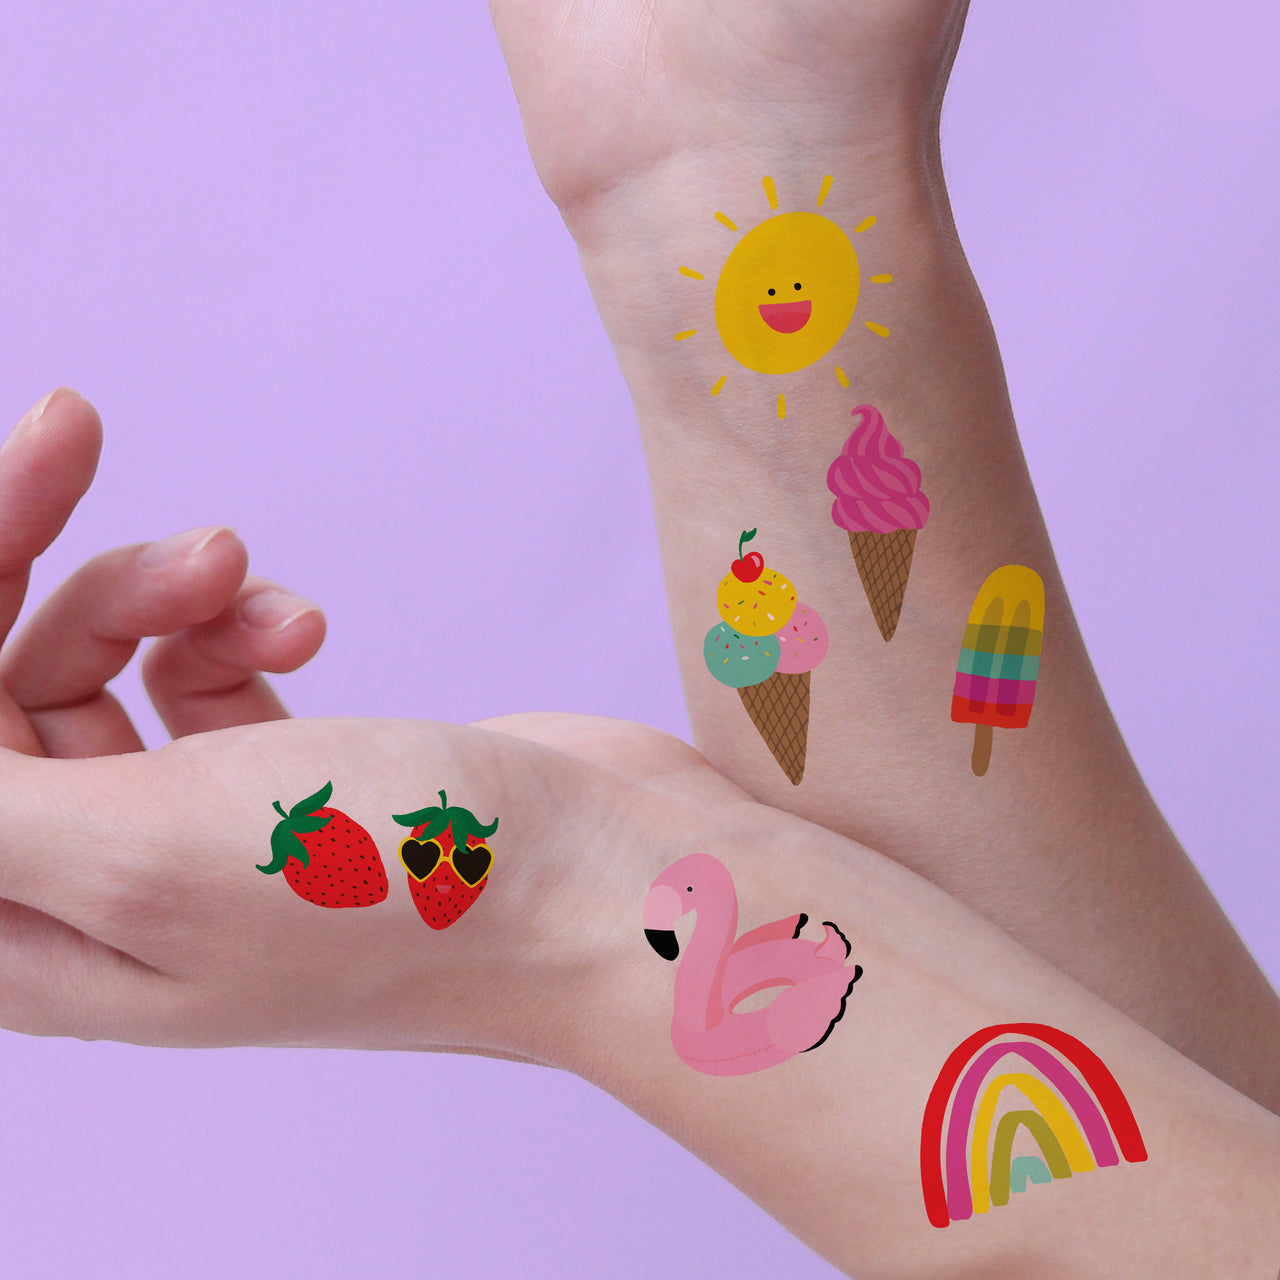 Shine bright in colorful Summer Fun temporary tattoos: sun, popsicle, ice cream cone, strawberries, flamingo float and rainbow. #FLASHTAT @FlashTattoos